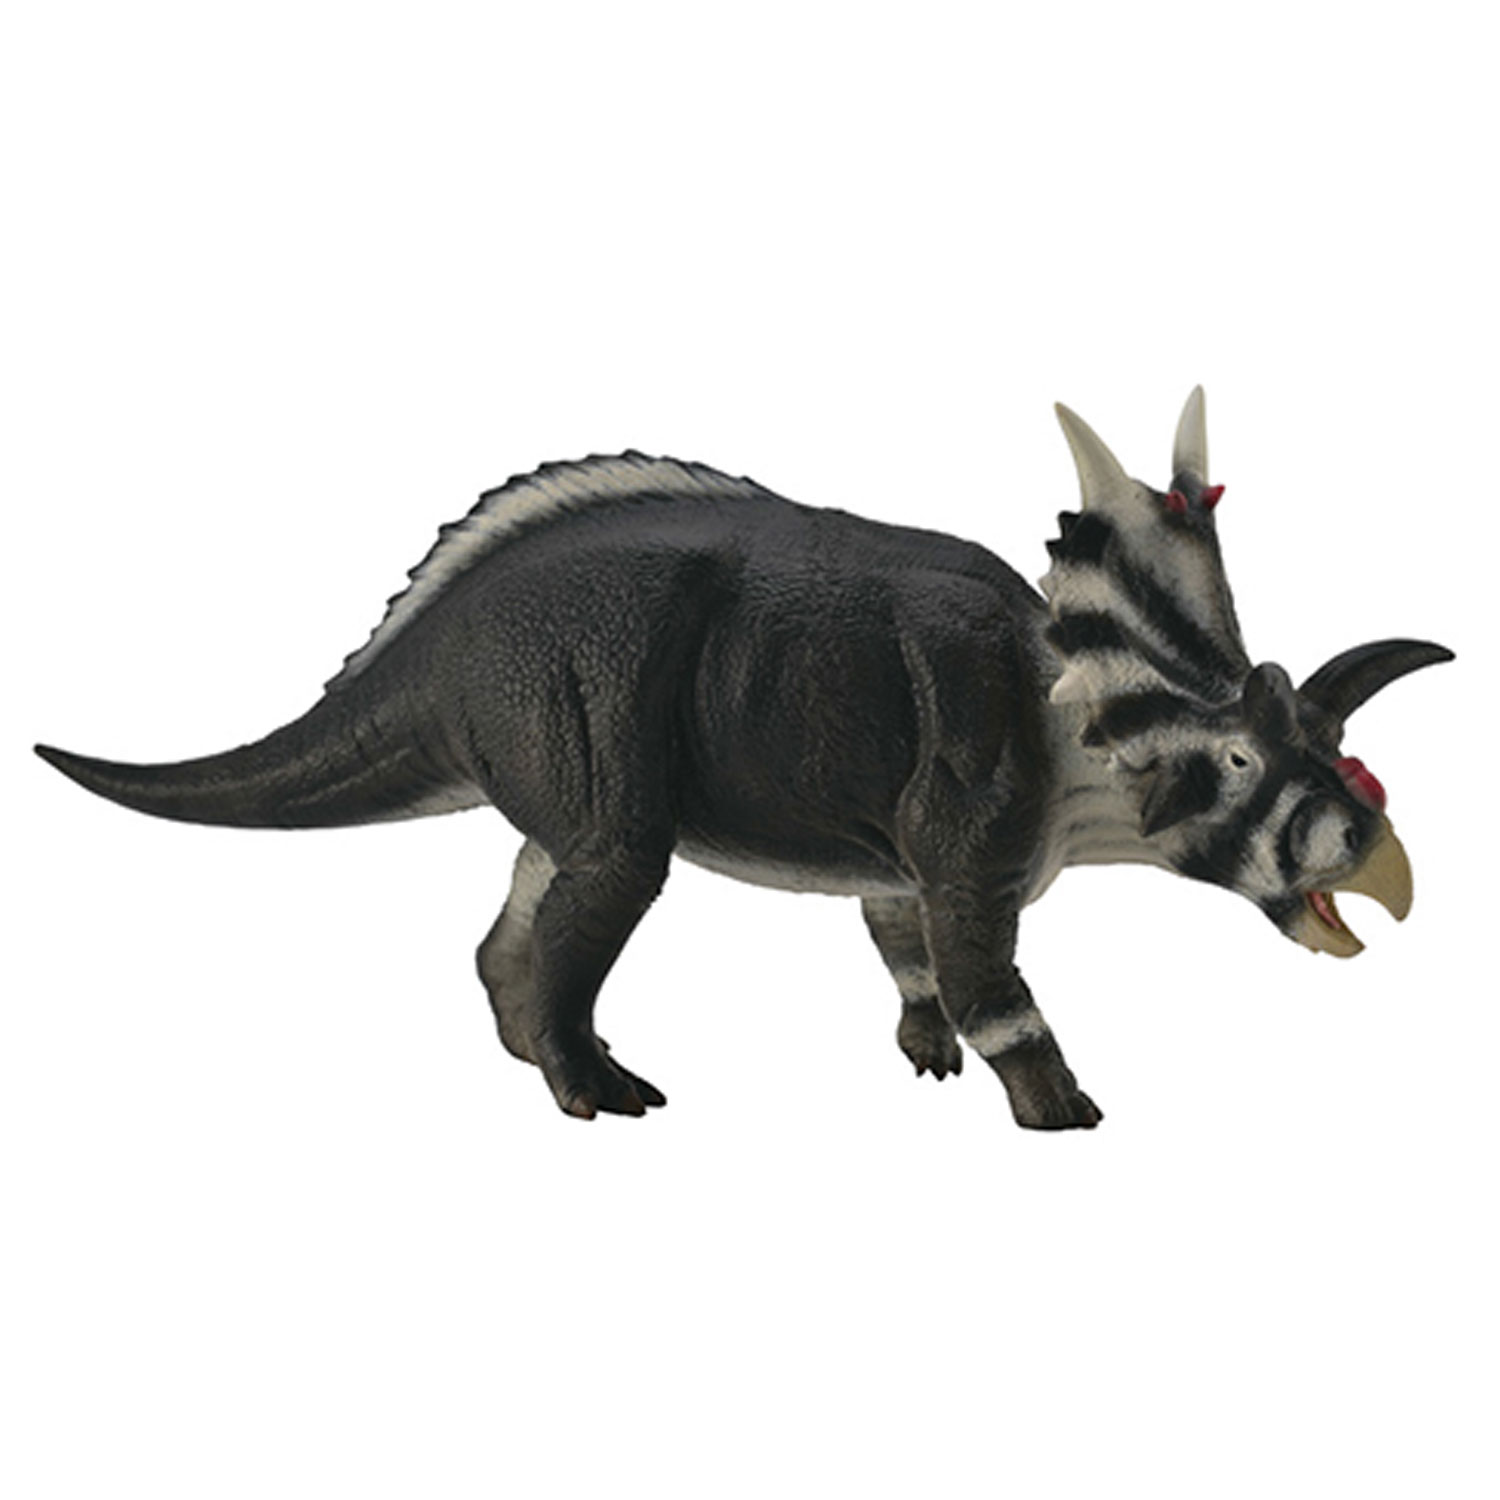 Figurine Dinosaure : Xénoceratops